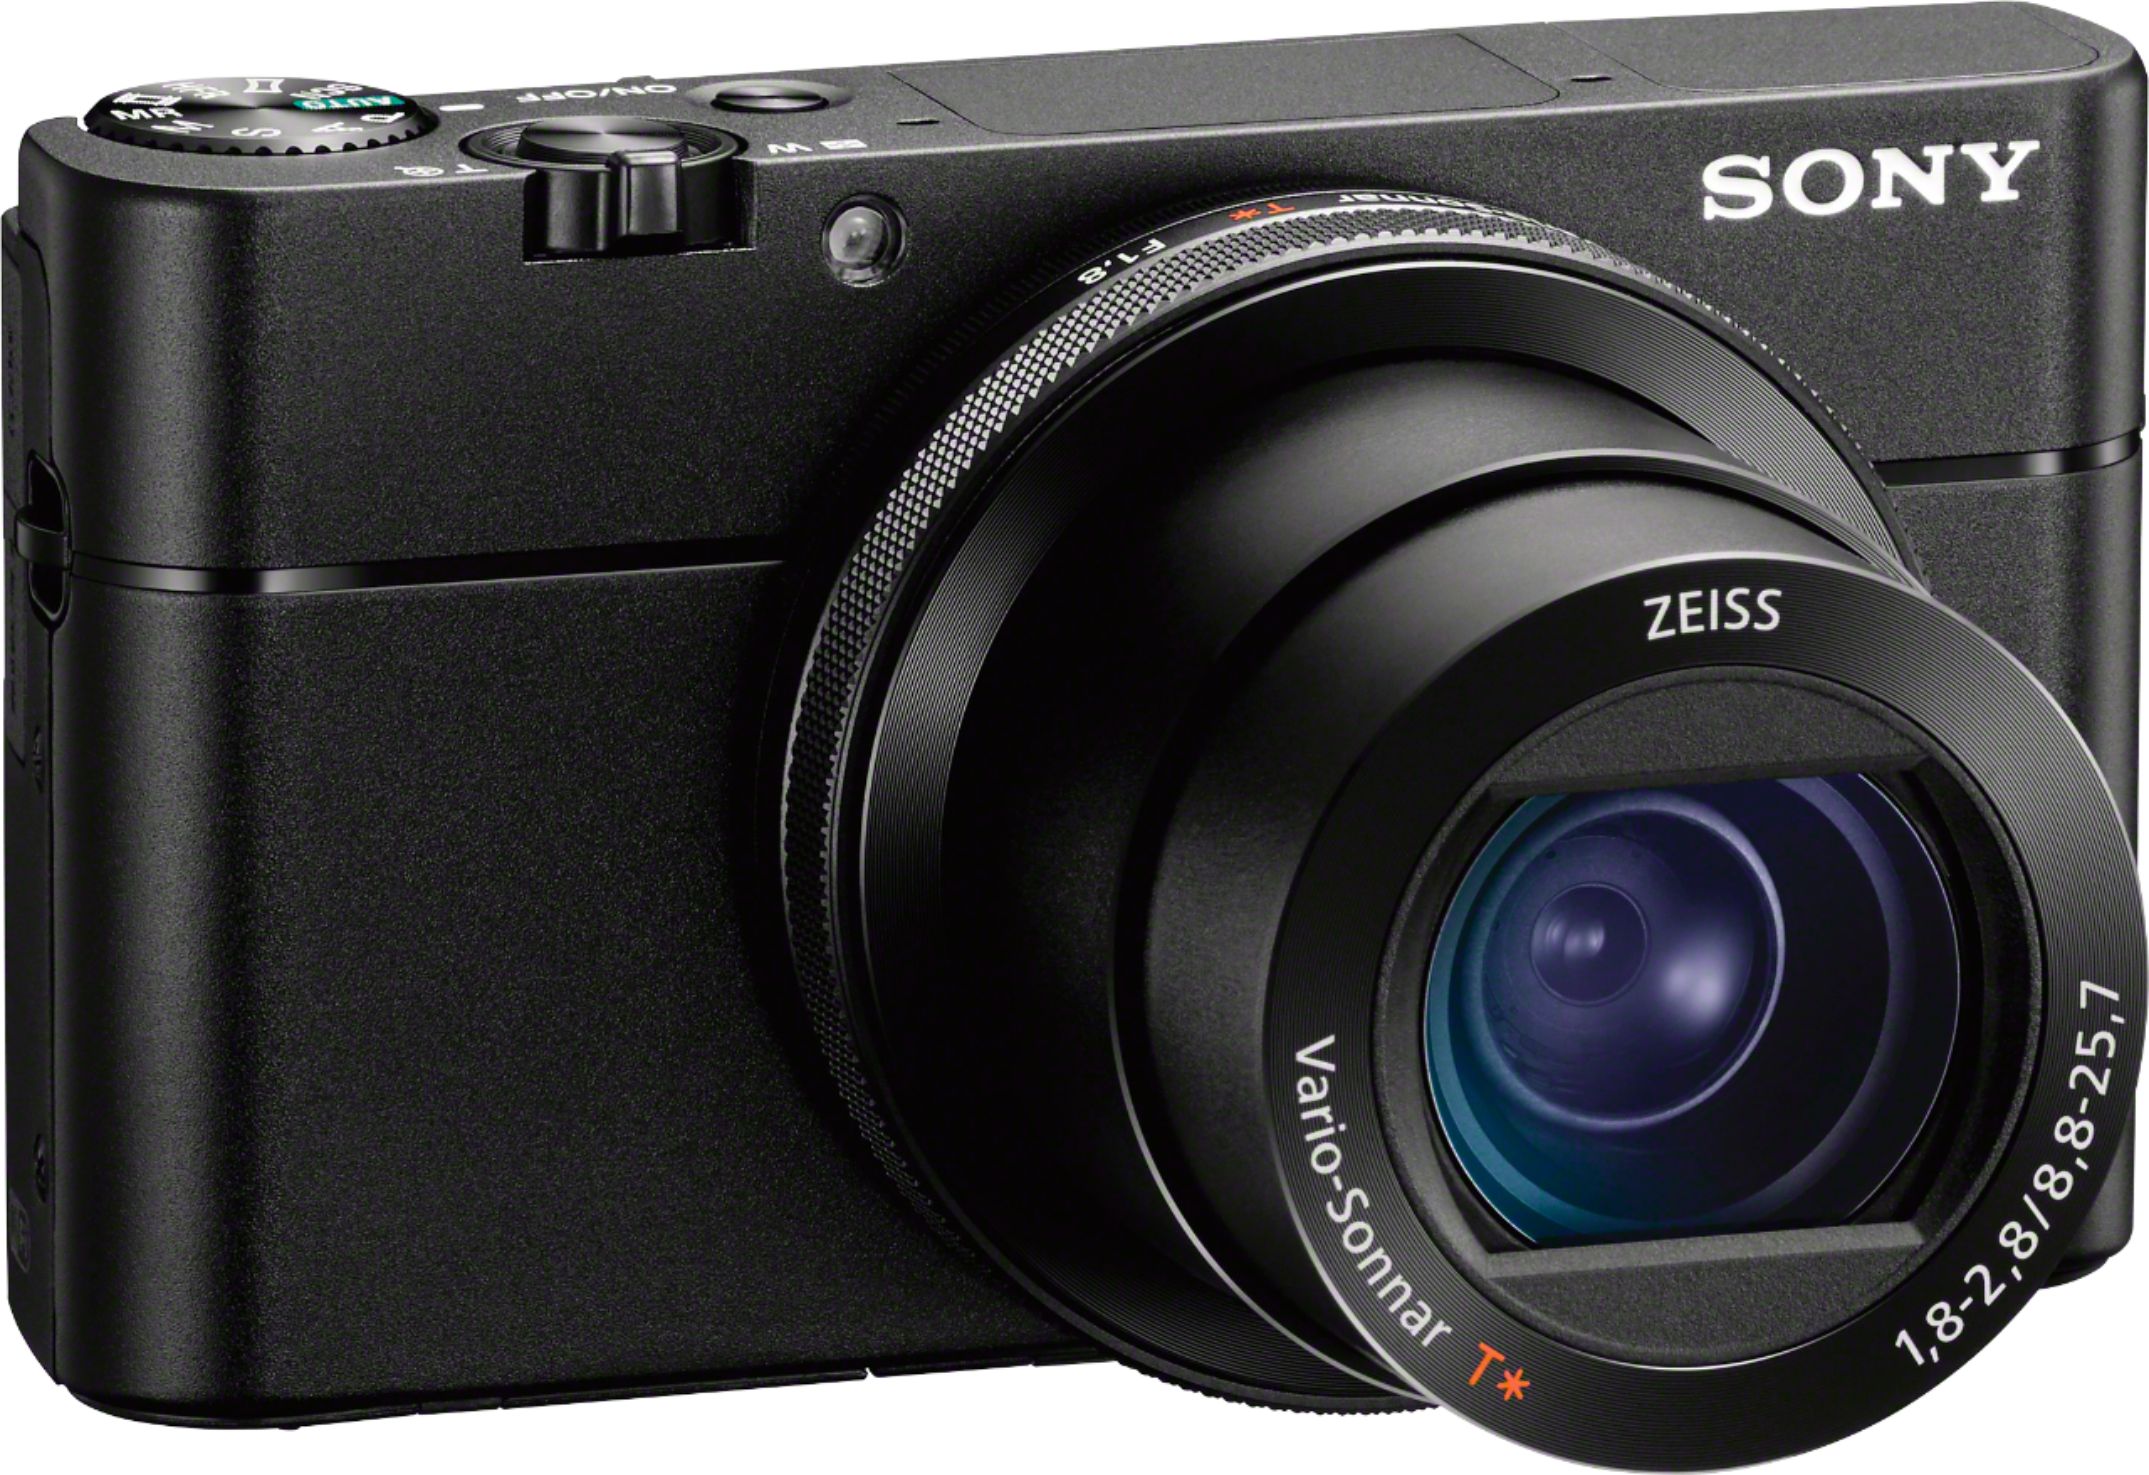 Angle View: Sony - Cyber-shot DSC-RX100 V 20.1-Megapixel Digital Camera - Black